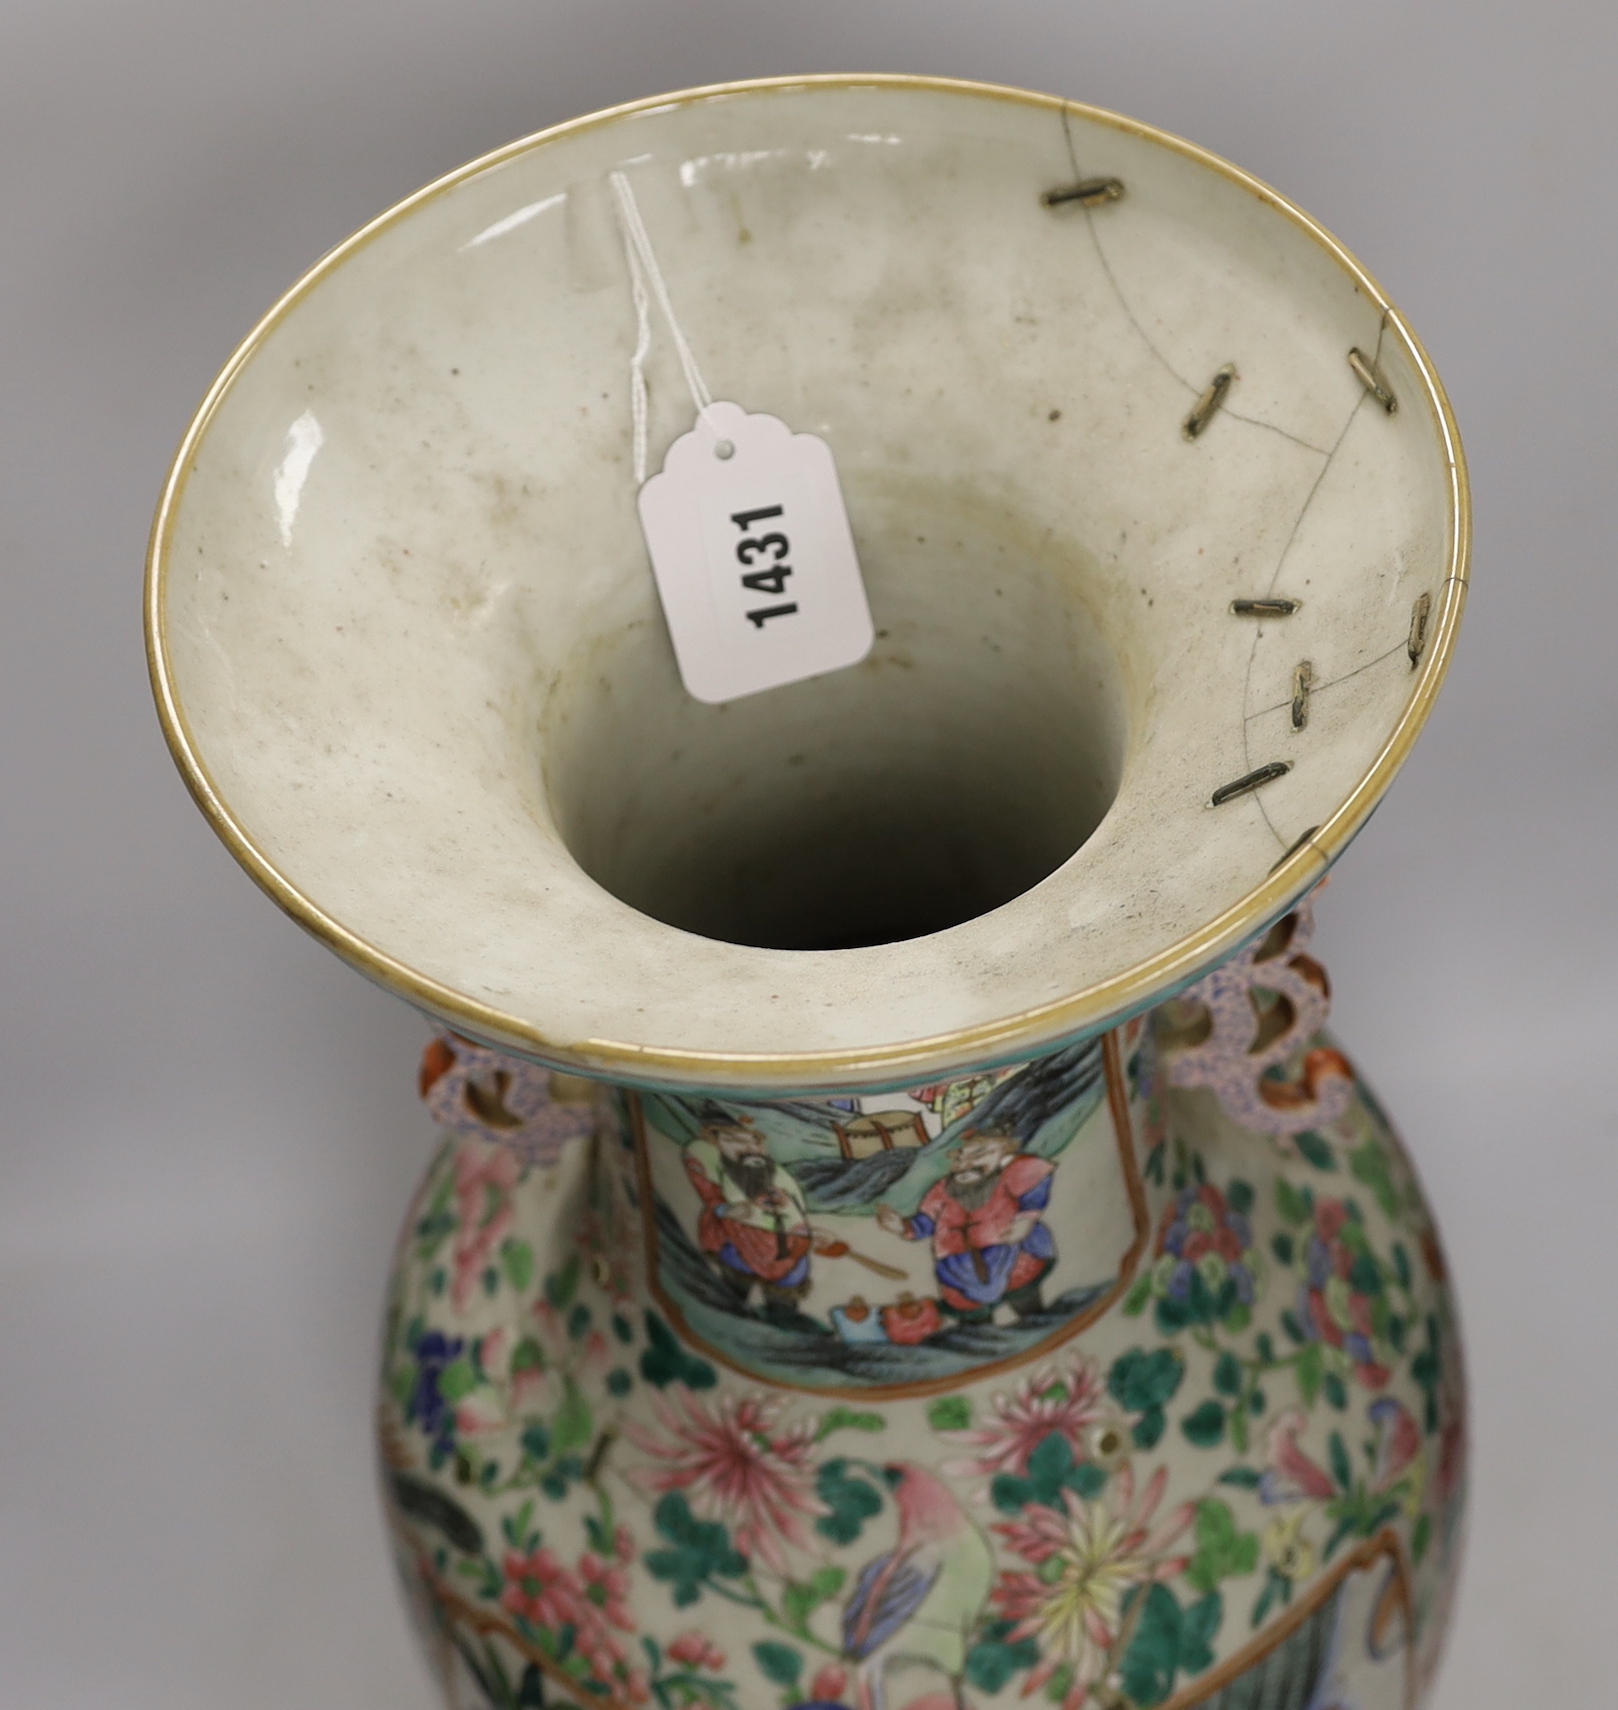 A large 19th century Chinese famille rose vase, damaged, 63cm